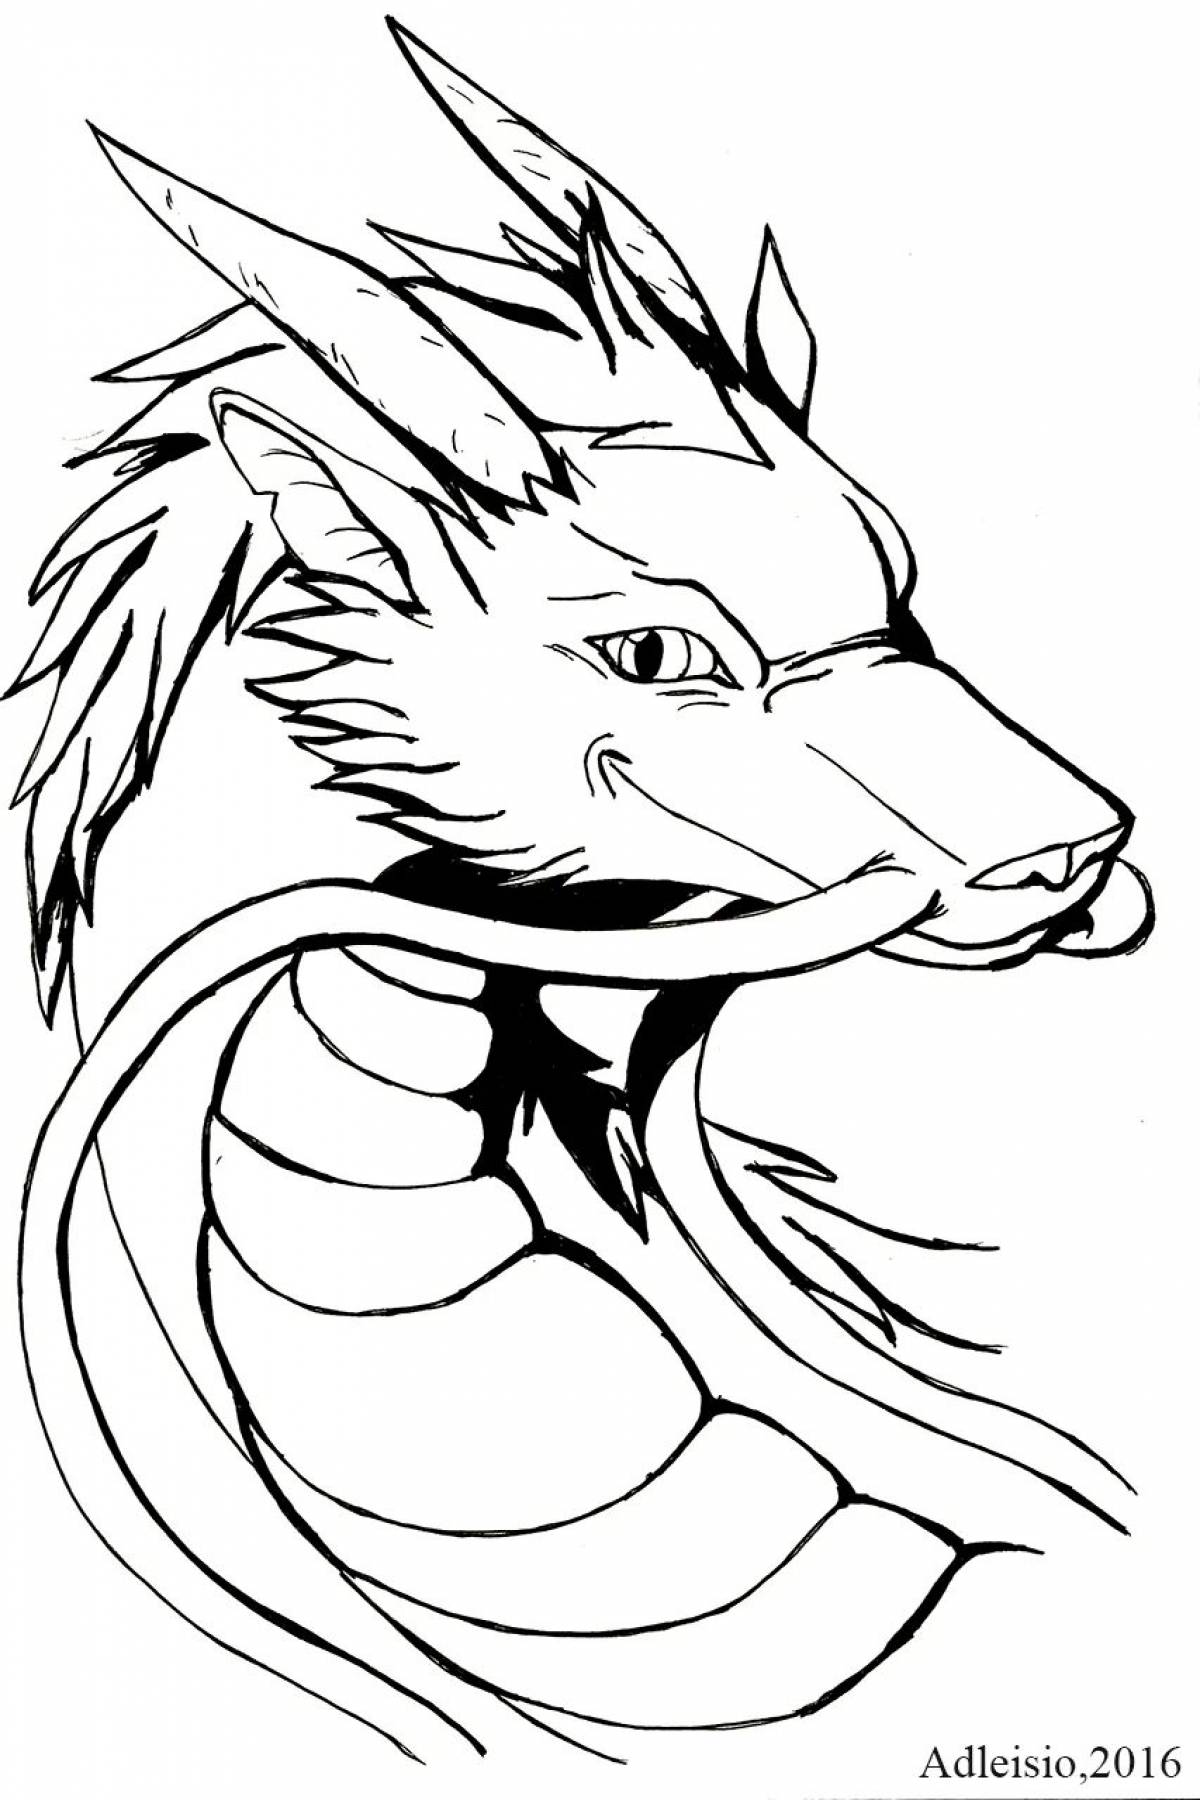 Exalted dragon haku coloring page